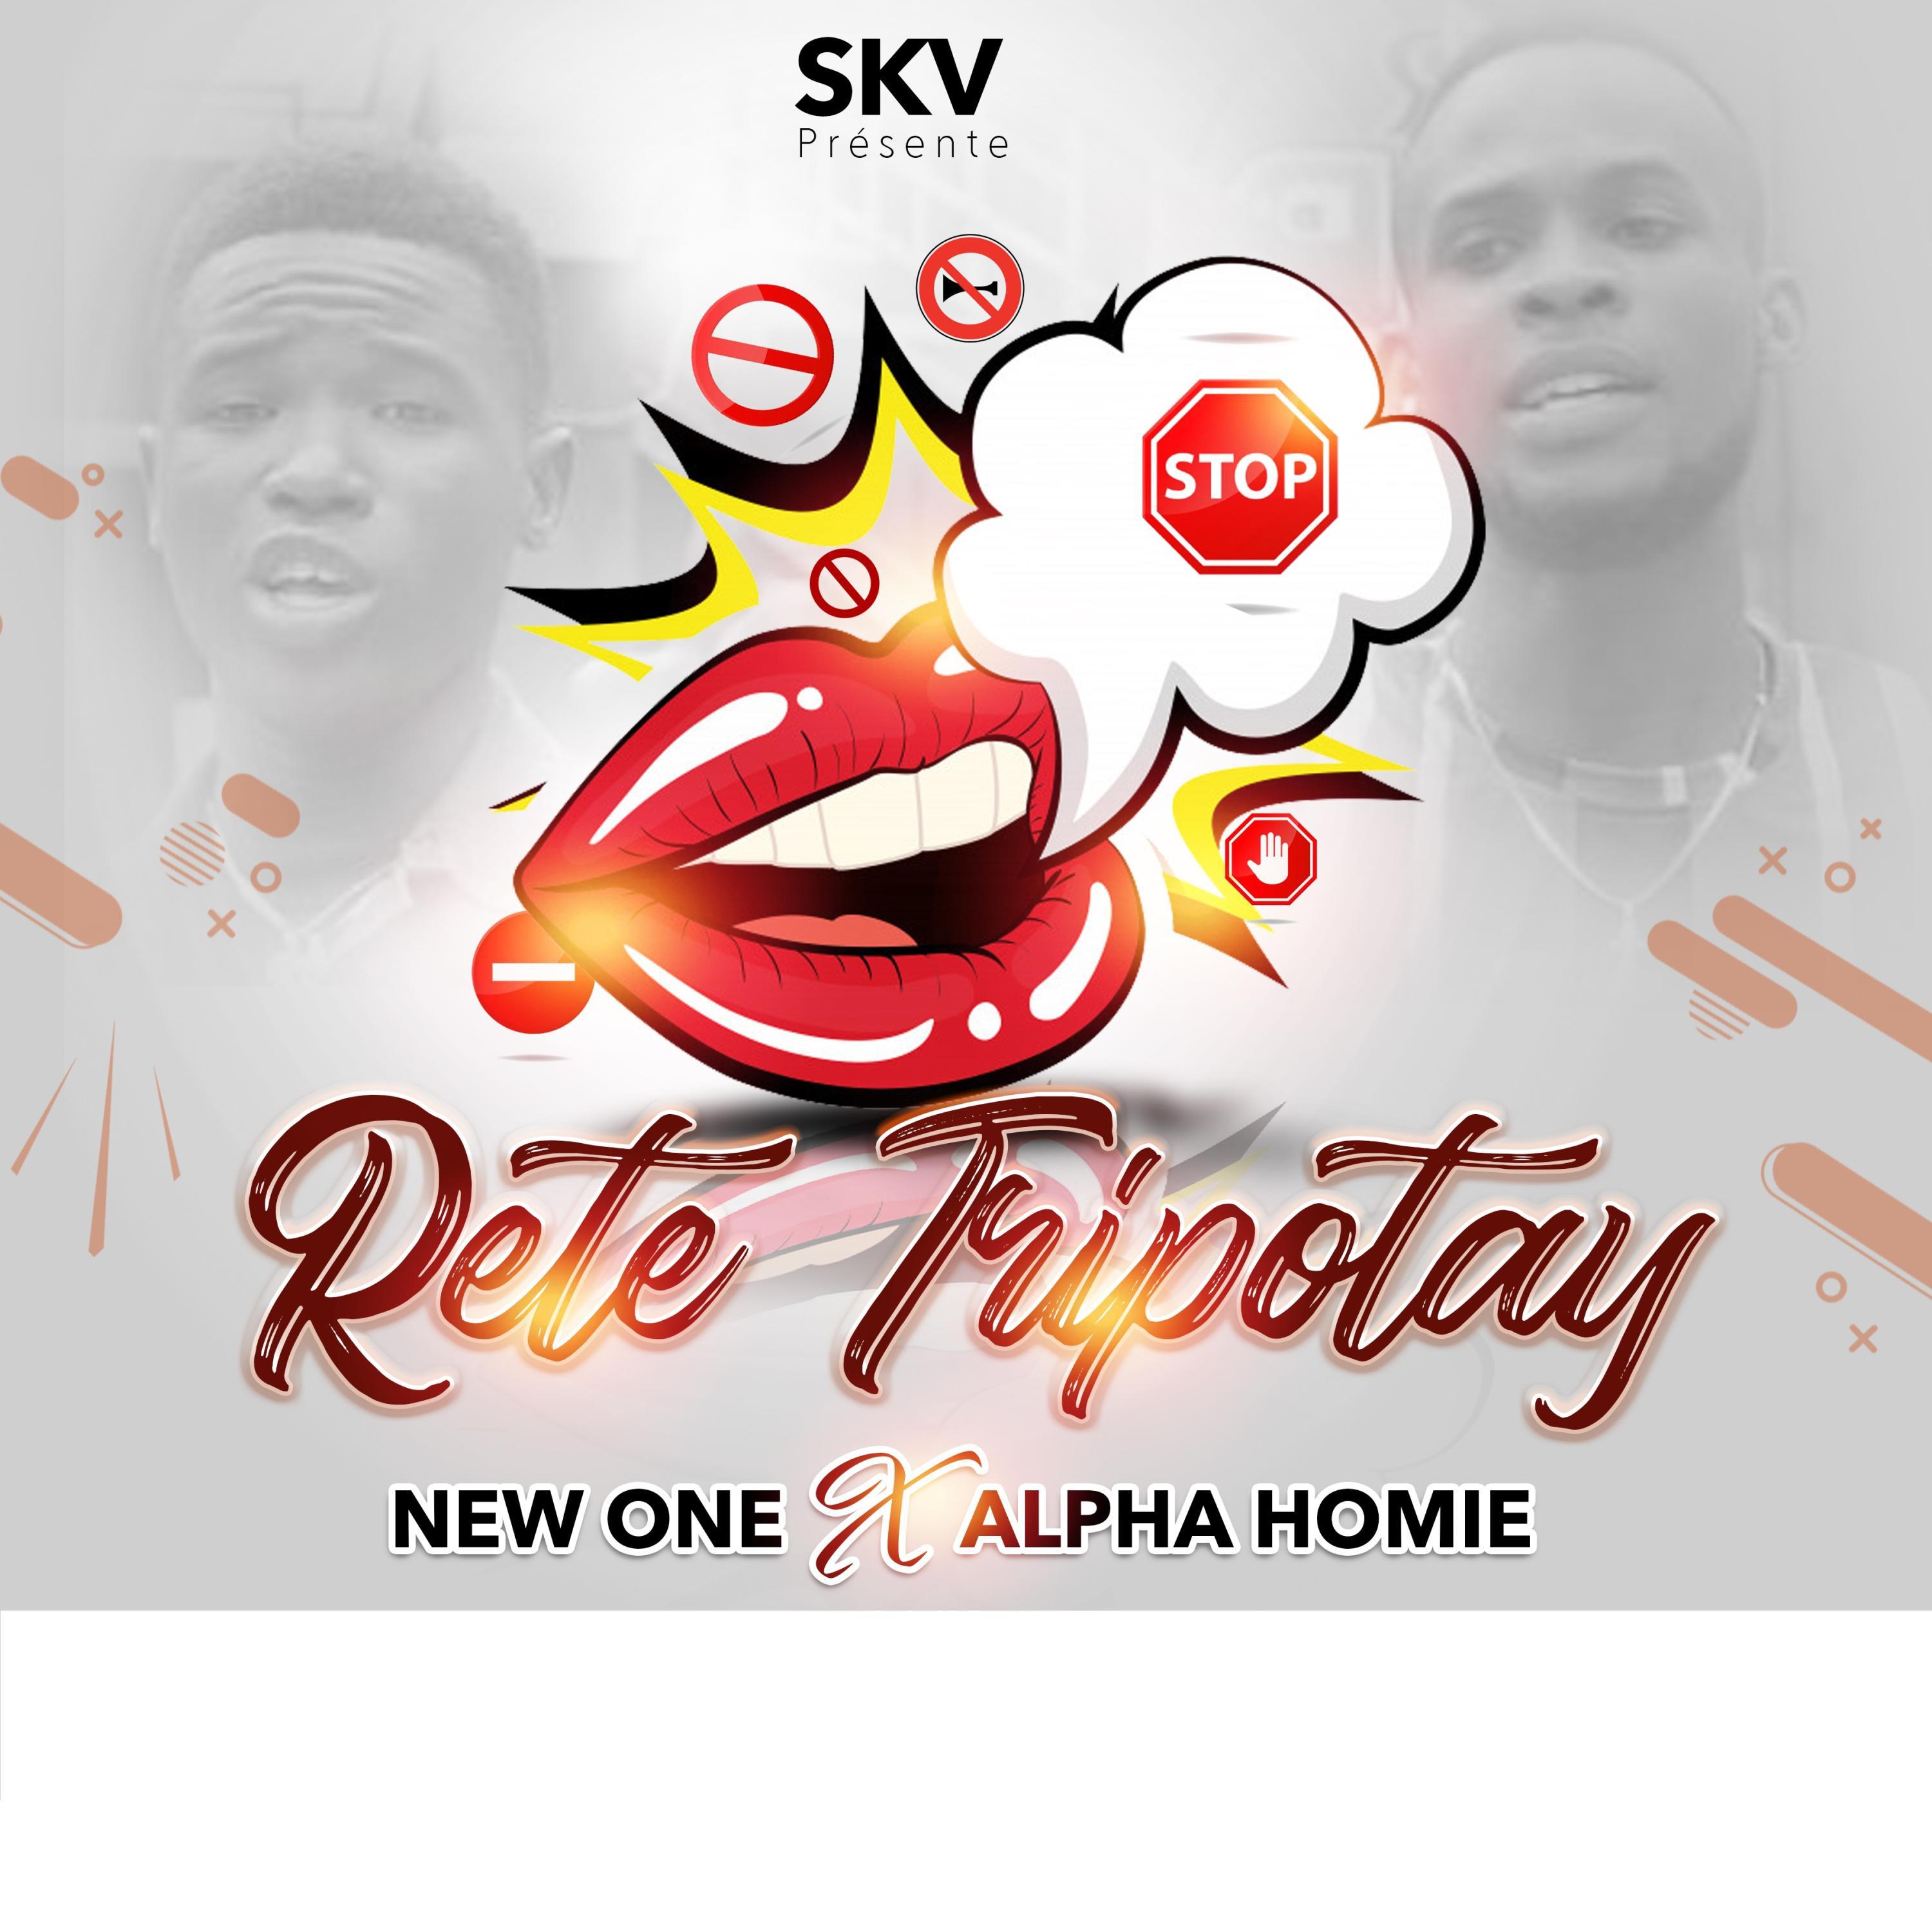 Internet Music HT - Rete Tripotay (feat. New One SKV & Alpha Homie)